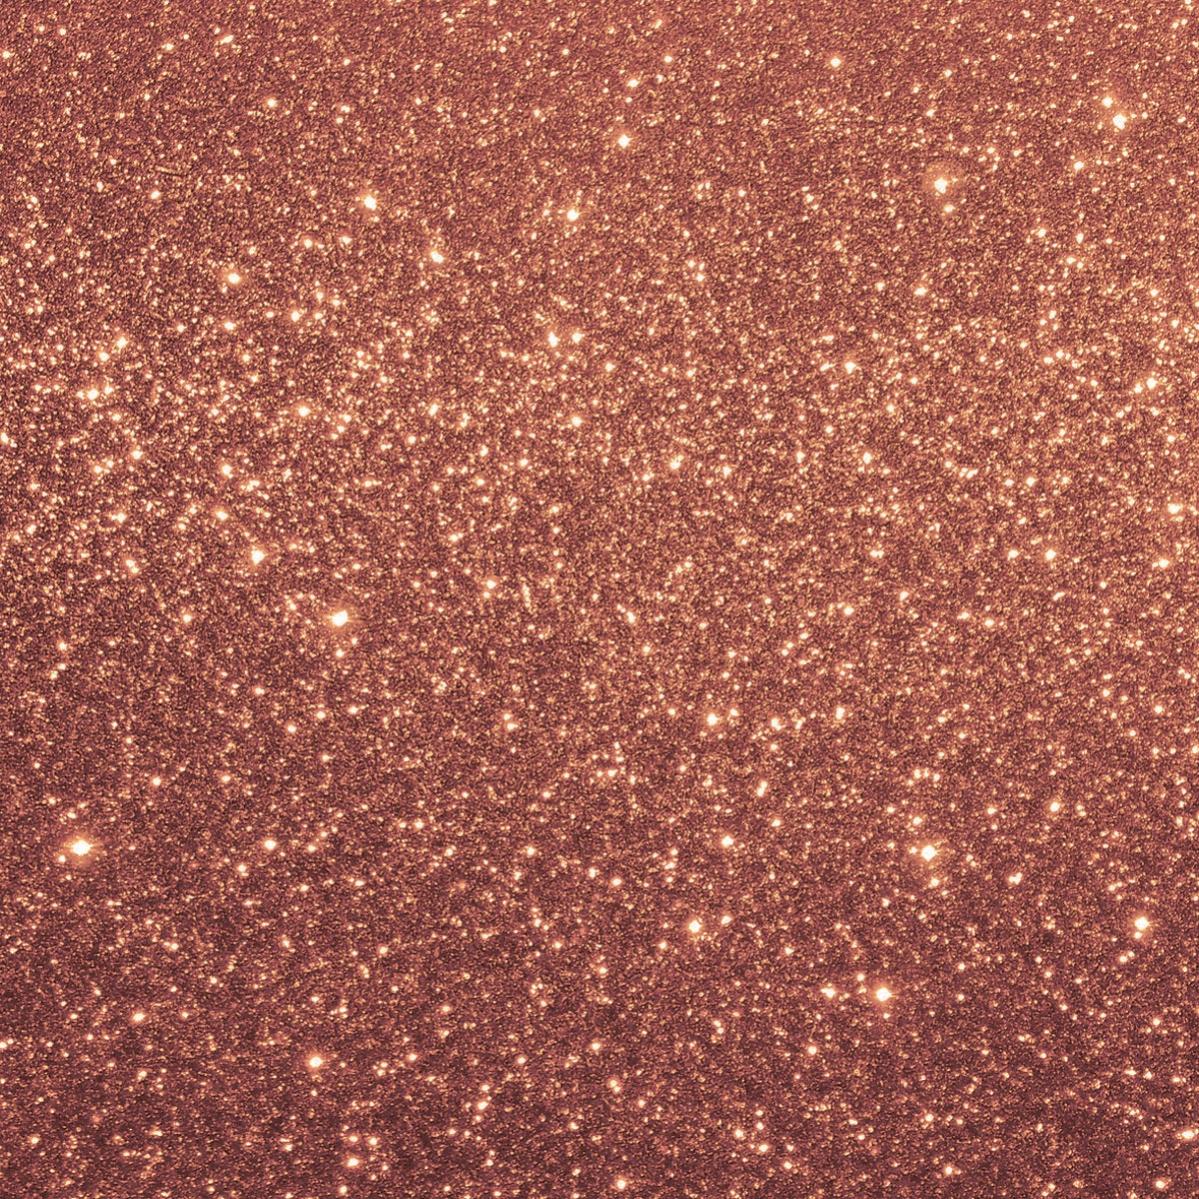 TIXE 625.302 Glittertix Additivo Glitter per Pittura, Vernice, Cangiante,  250 ml